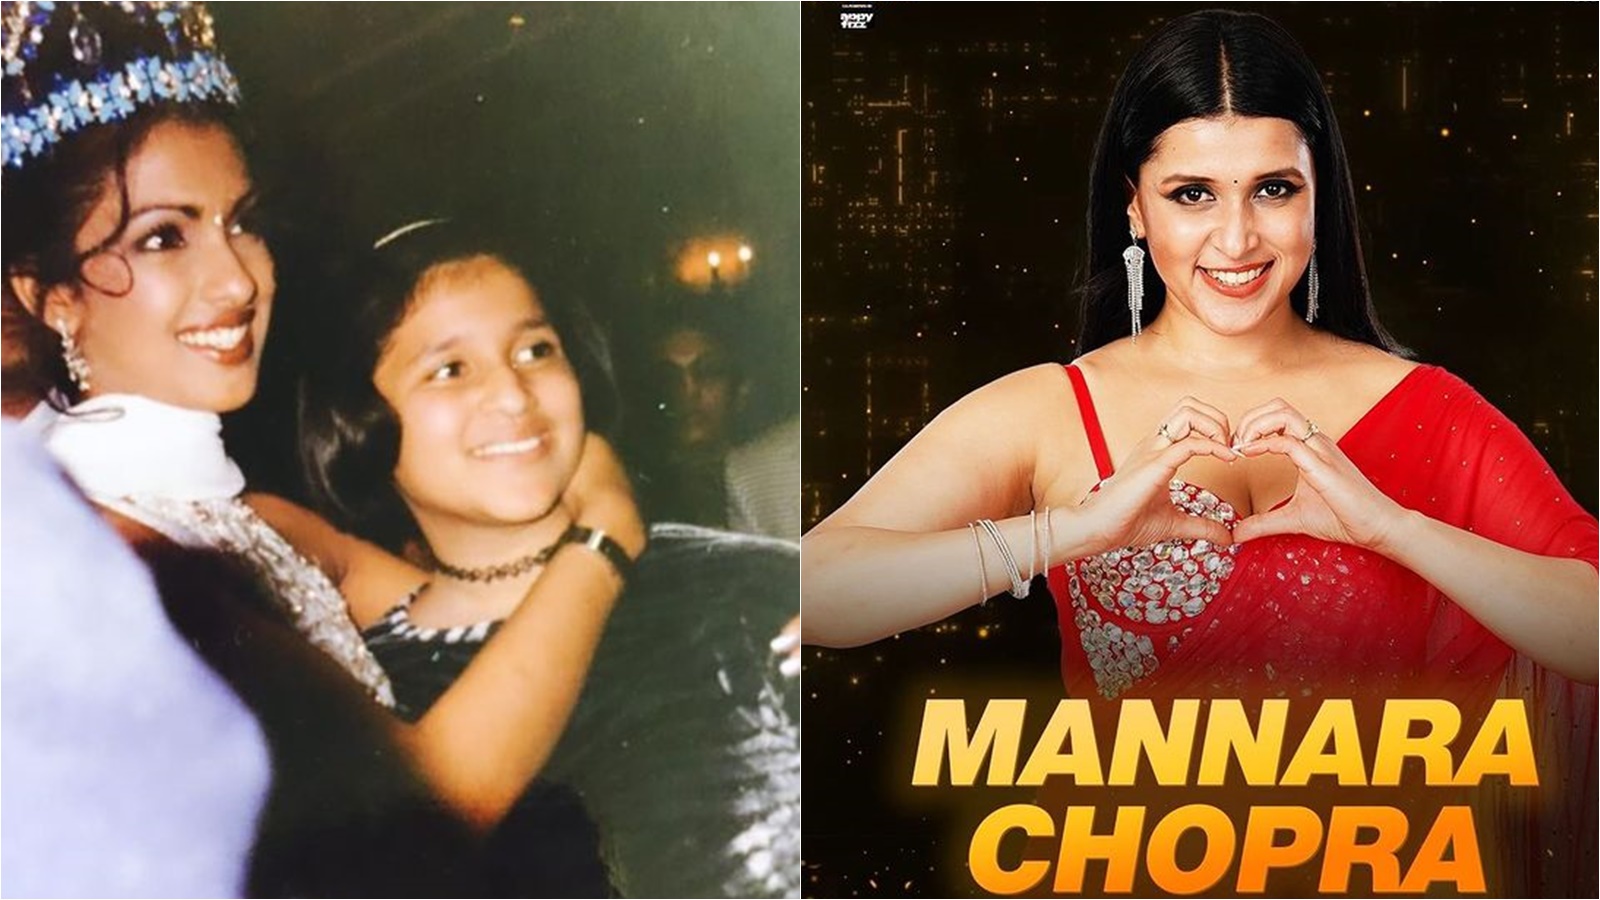 Priyanka Chopra Ki Aur Salman Khan Ki Xxx Sex Video - Priyanka Chopra extends warm wishes to cousin Mannara Chopra for Bigg Boss  17, shares old photo: 'Good luck little one' | Bollywood News - The Indian  Express